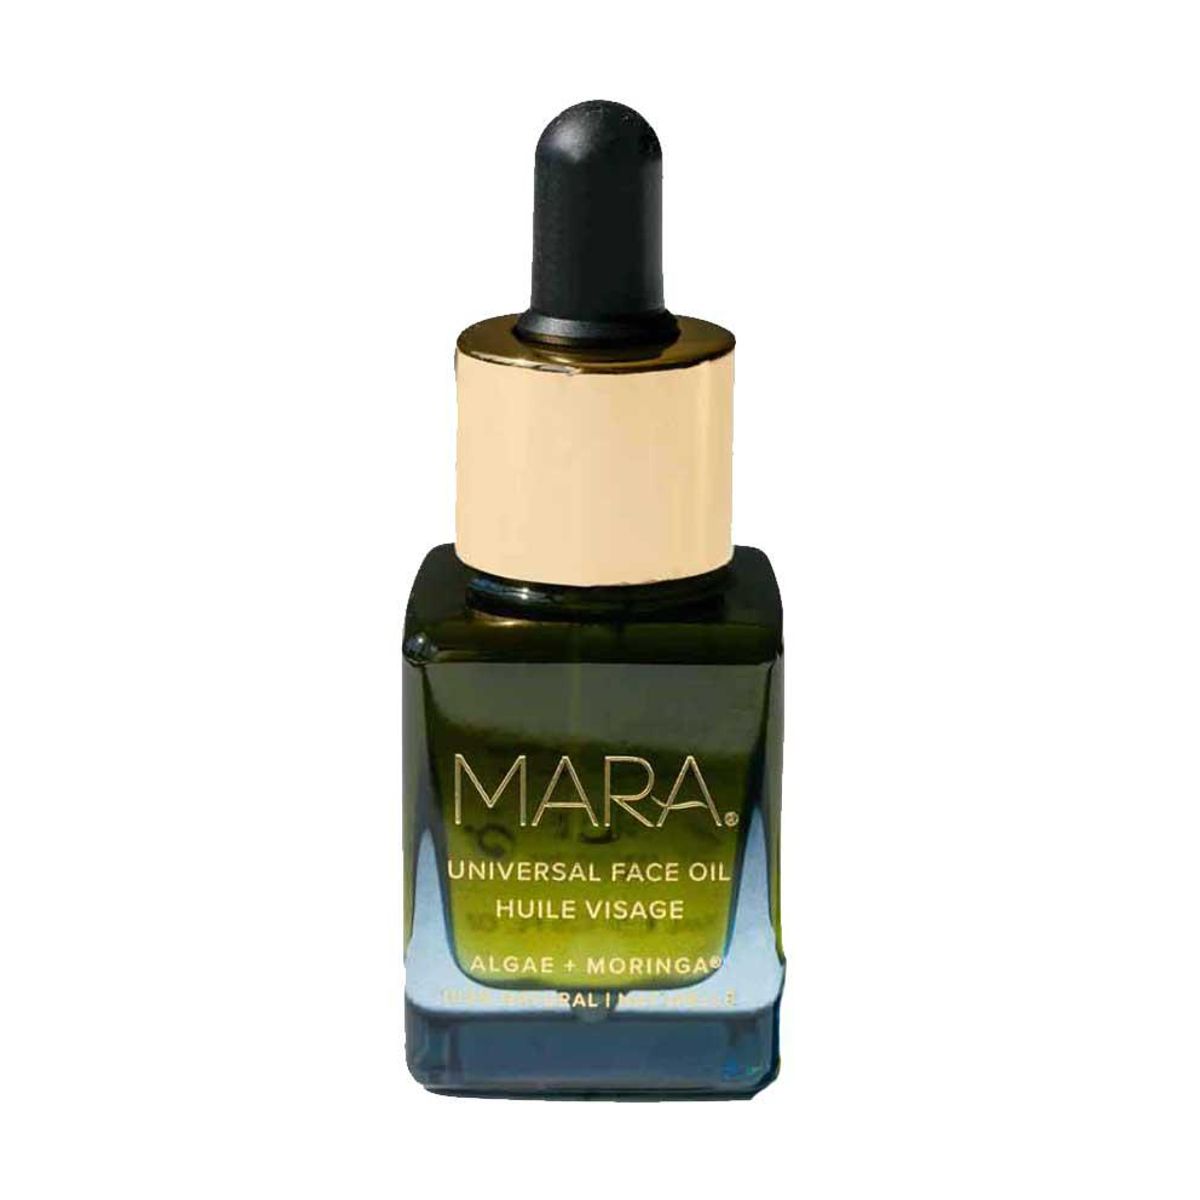 mara algae and moringa universal face oil